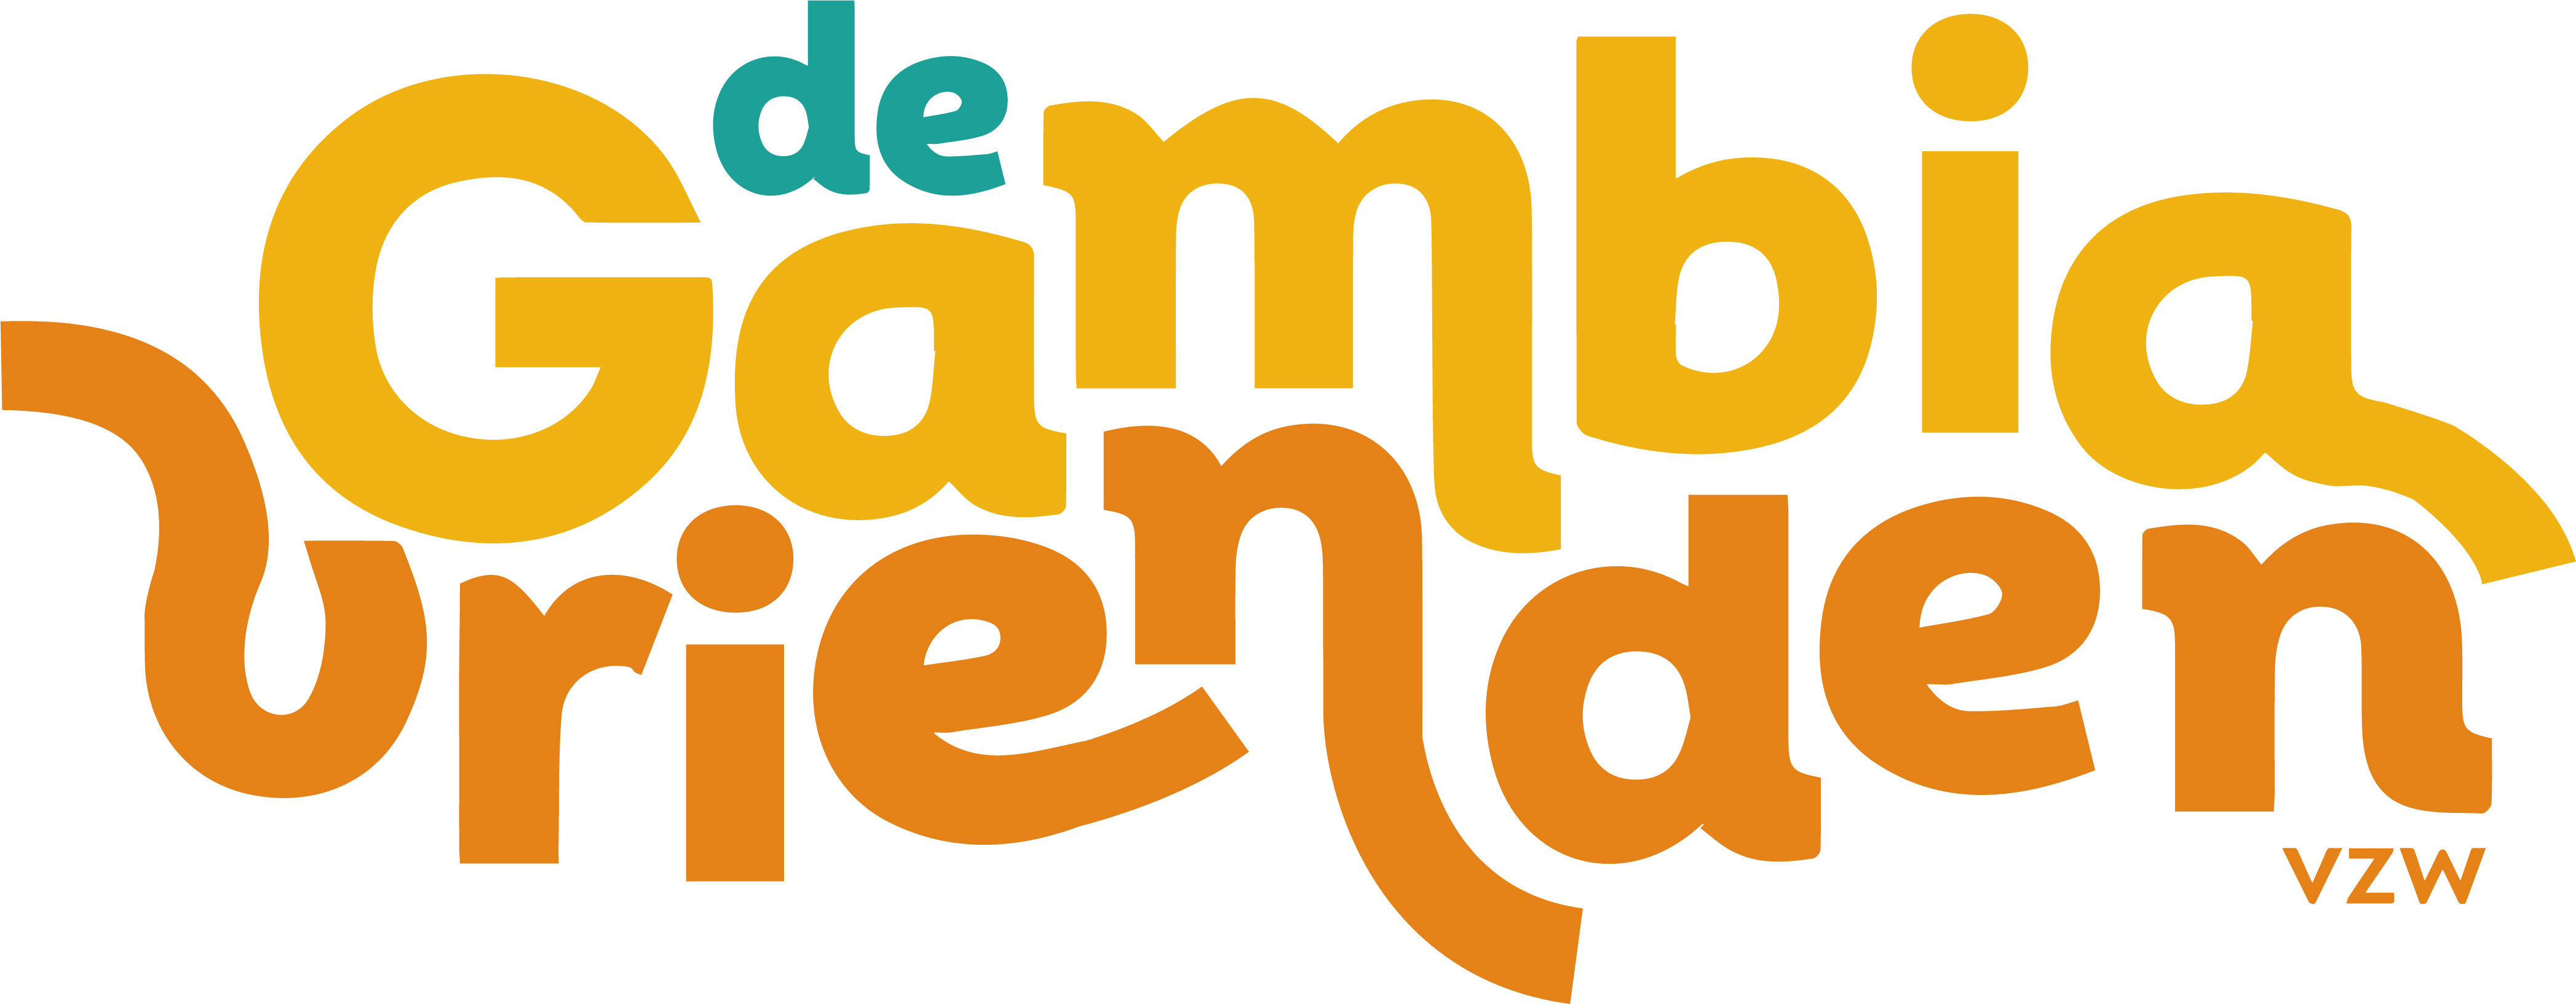 VZW De Gambiavrienden logo